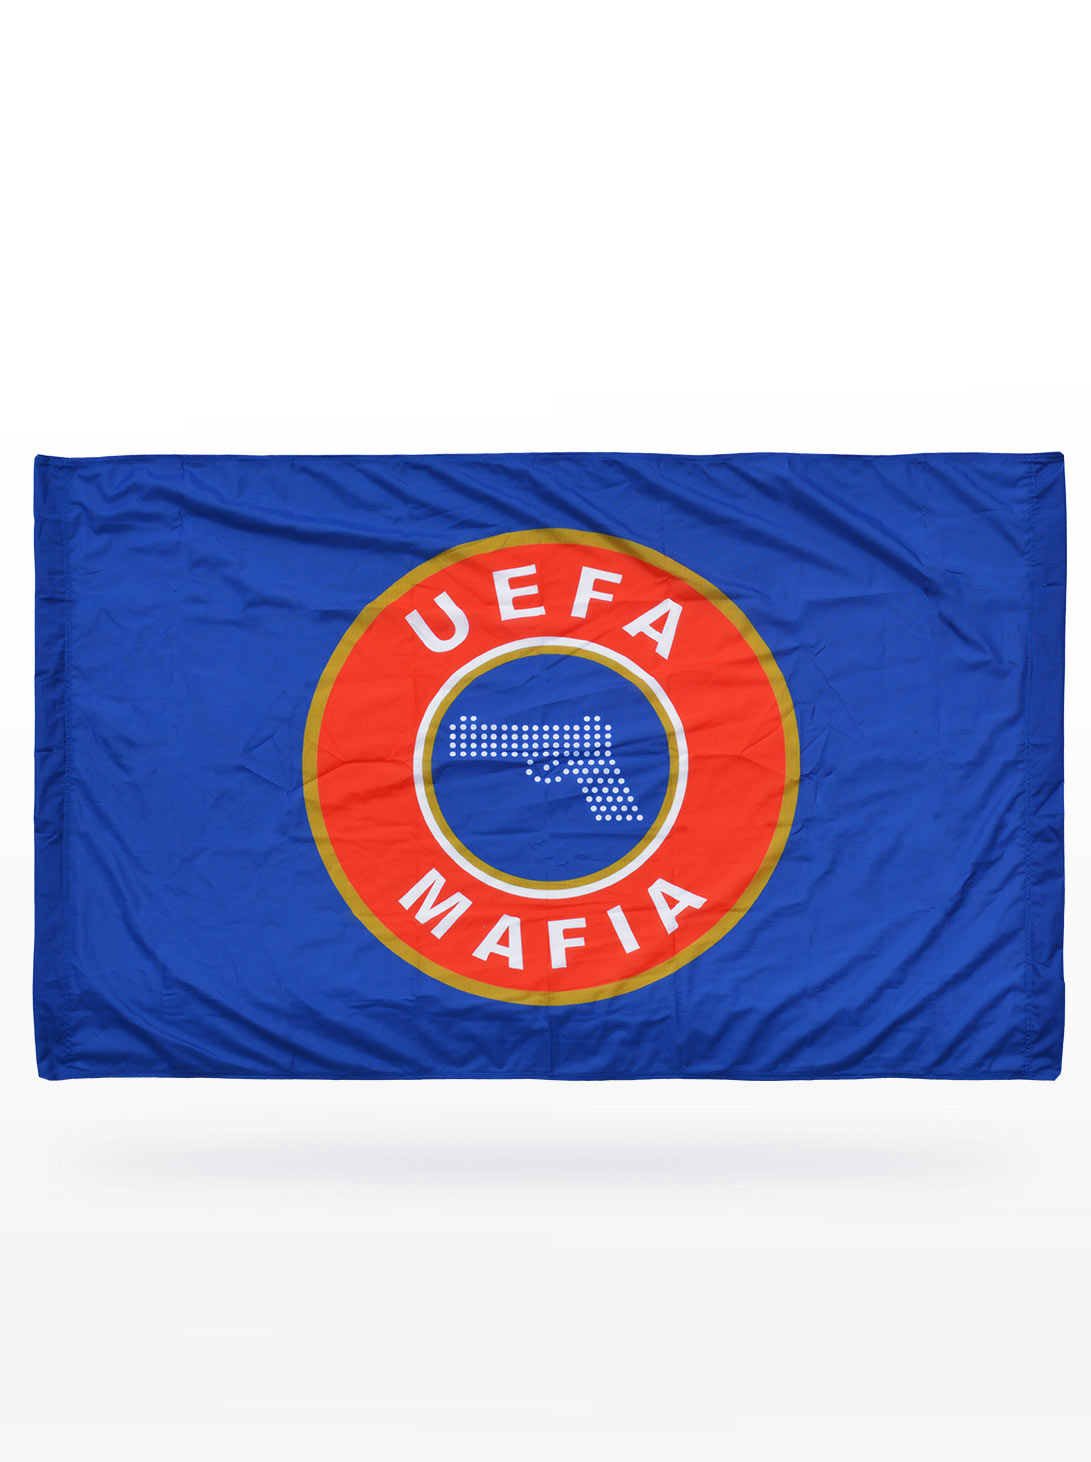 UEFA MAFIA vlag - Blauw